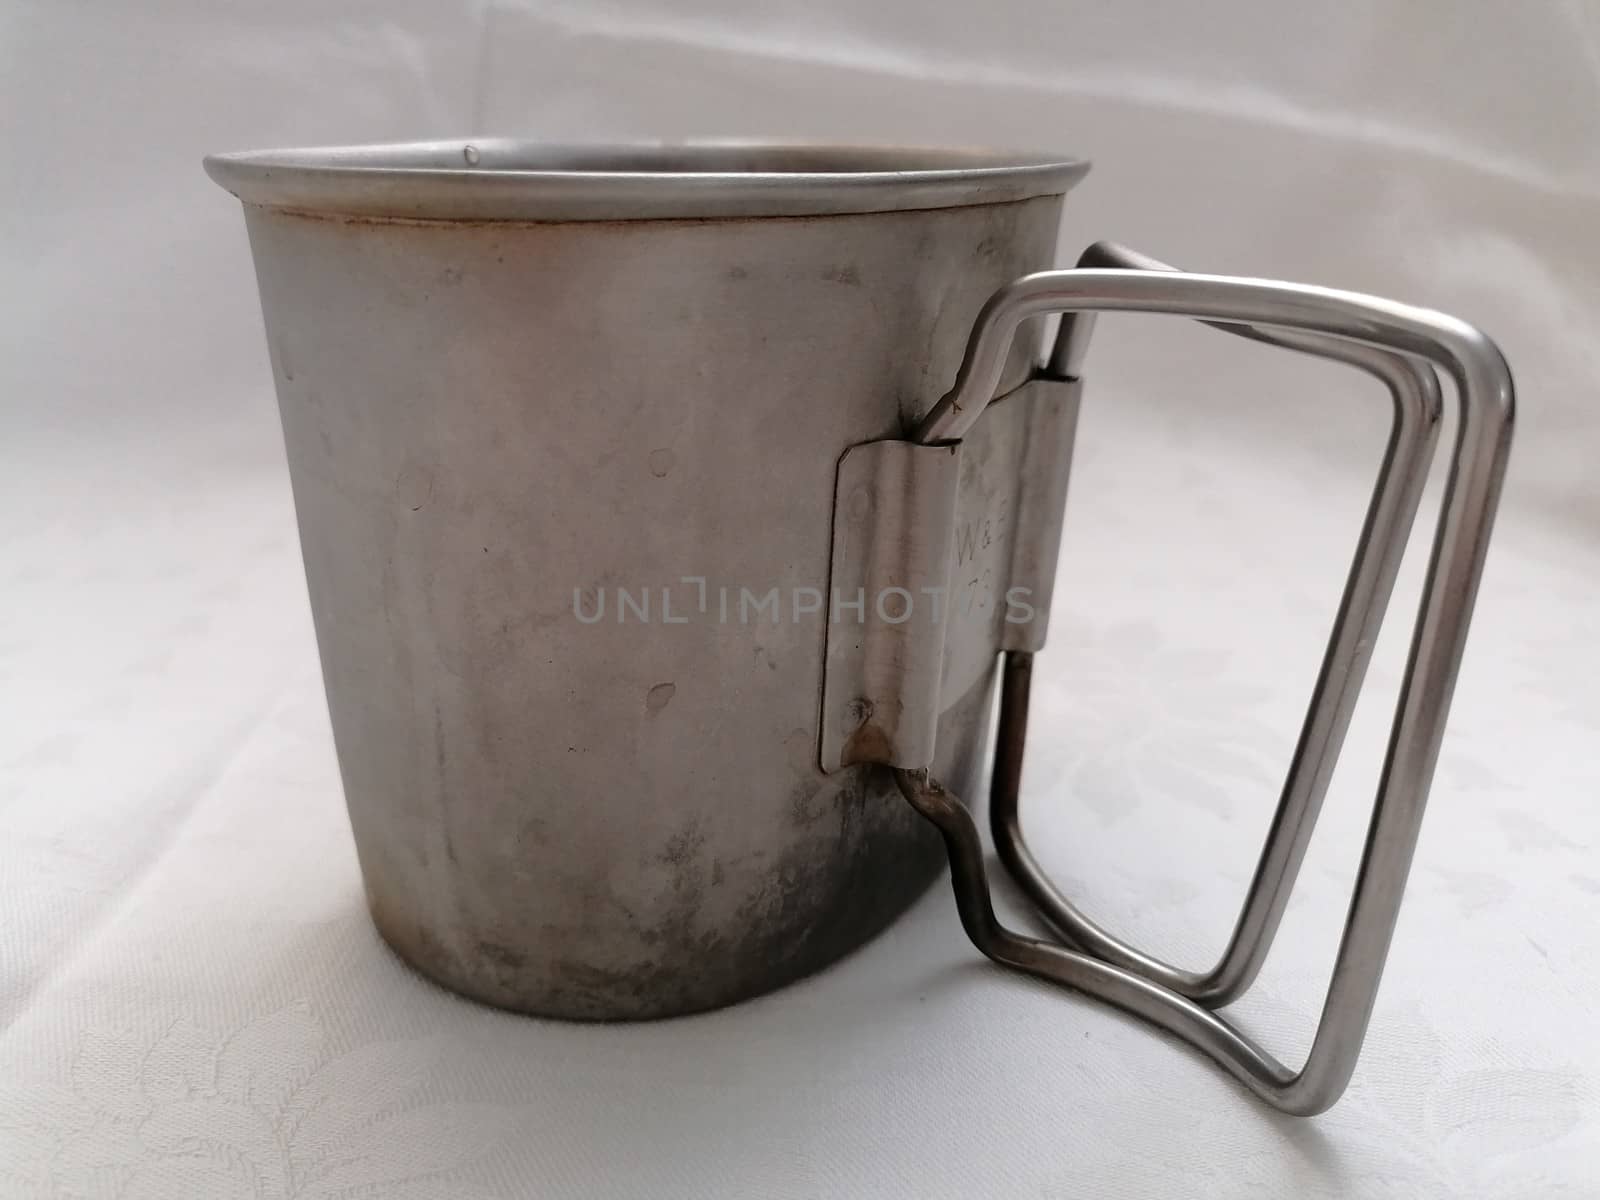 An old steel or tin army mug - crusader cup